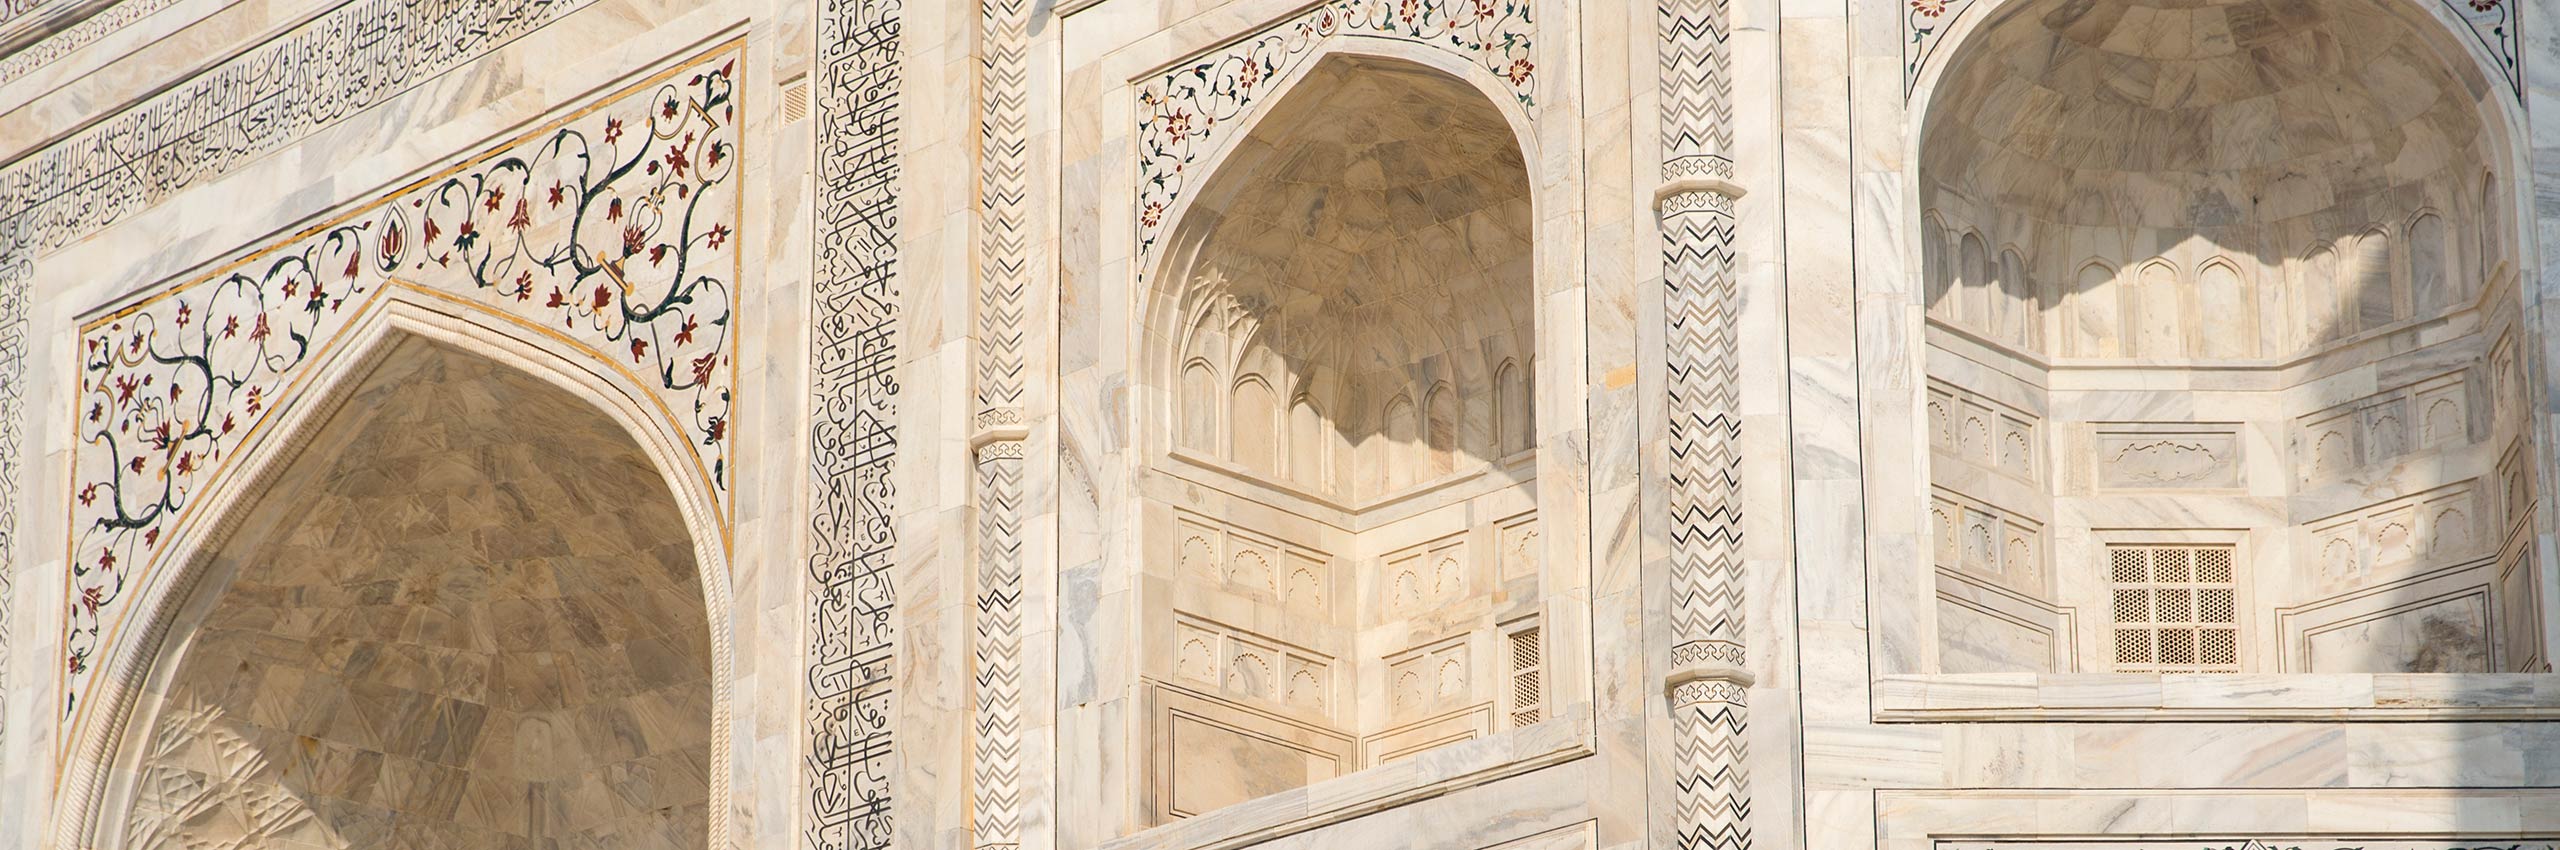 FCR-1106544 | India/Uttar Pradesh, Agra, Taj Mahal | © Kate Hockenhull/4Corners